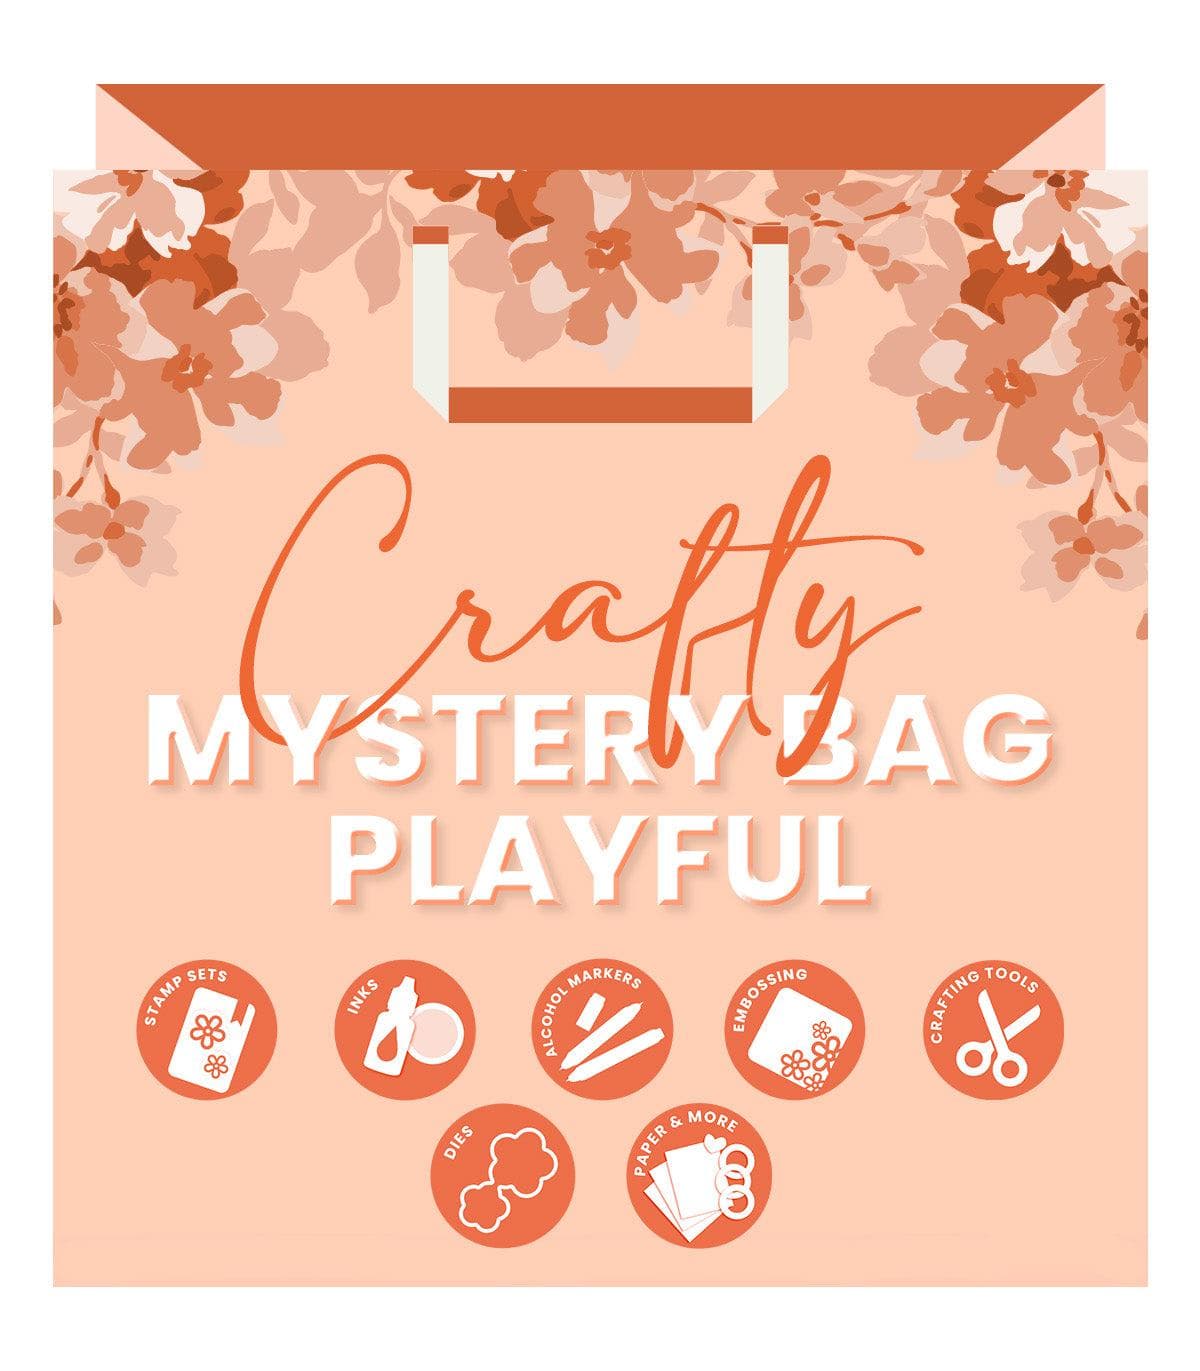 Crafty Mystery Bag - Playful